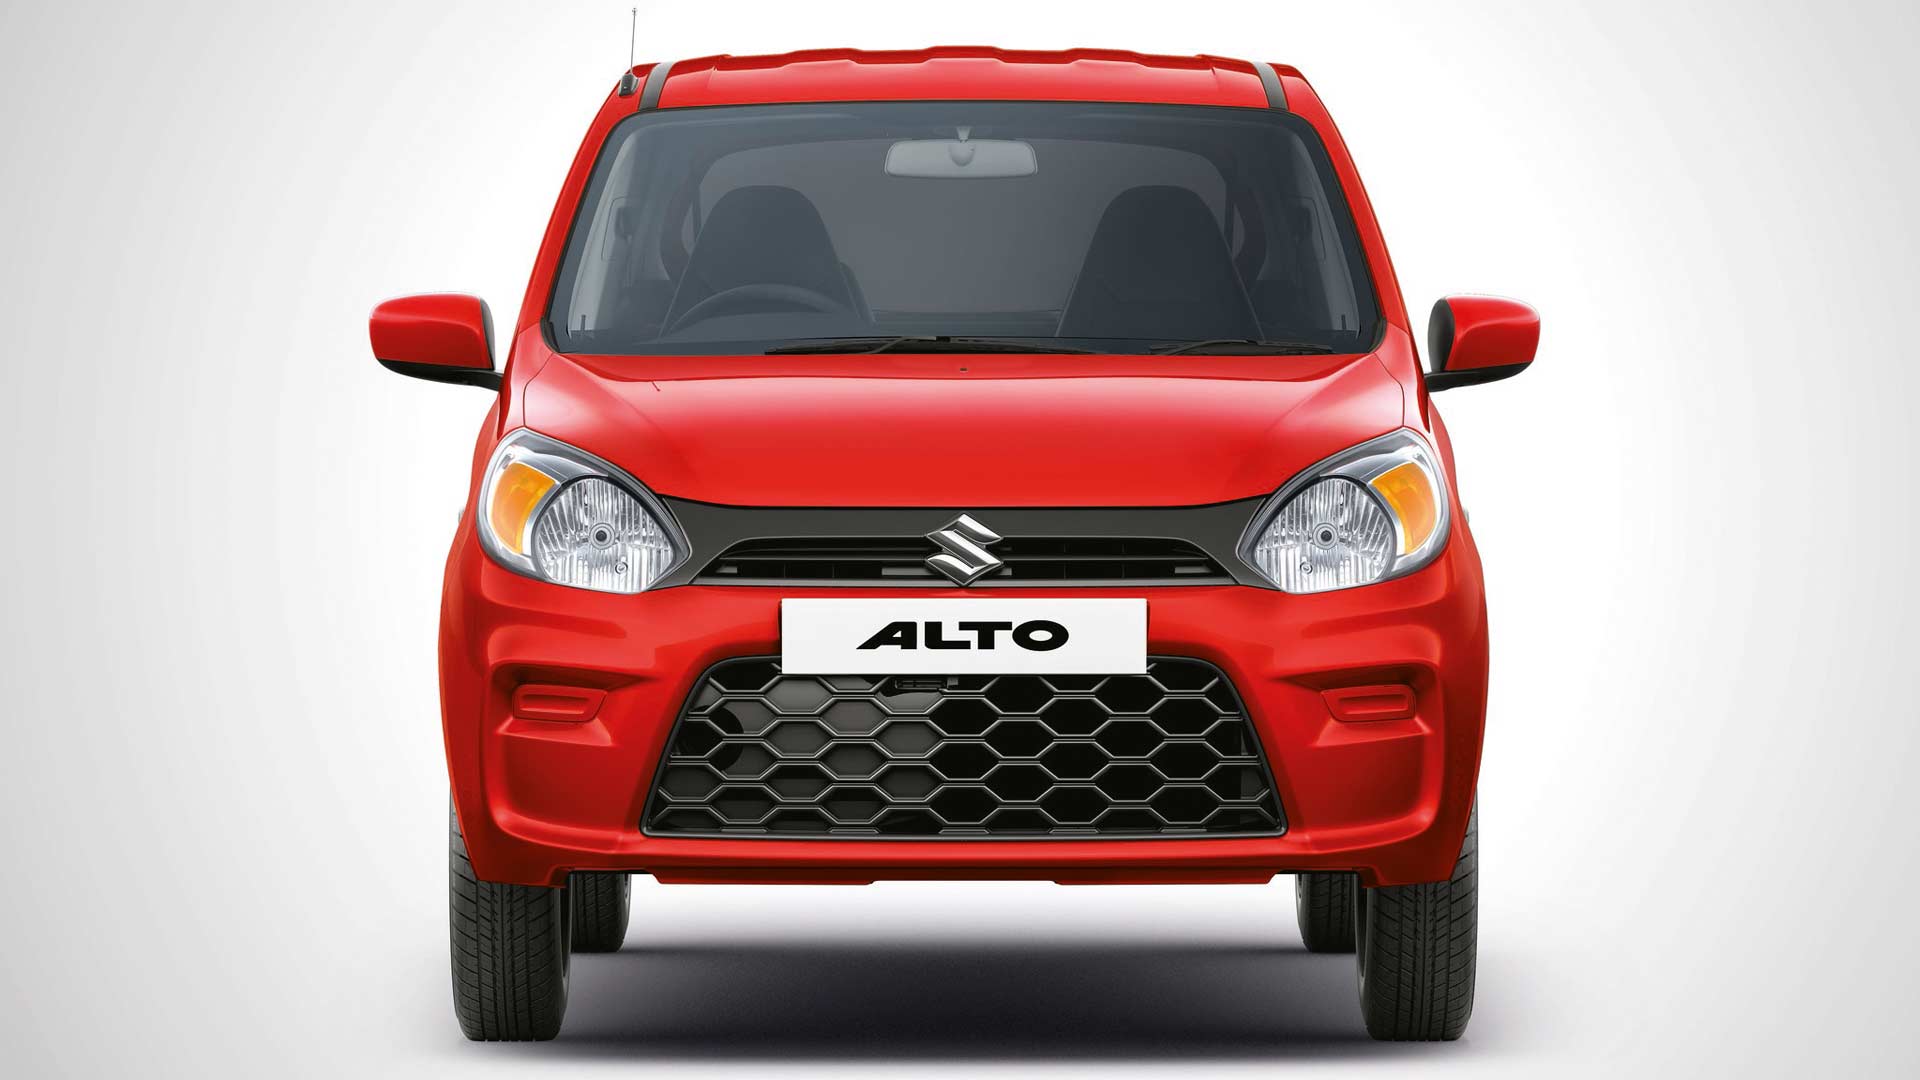 2019-Maruti-Suzuki-Alto-800-facelift_3